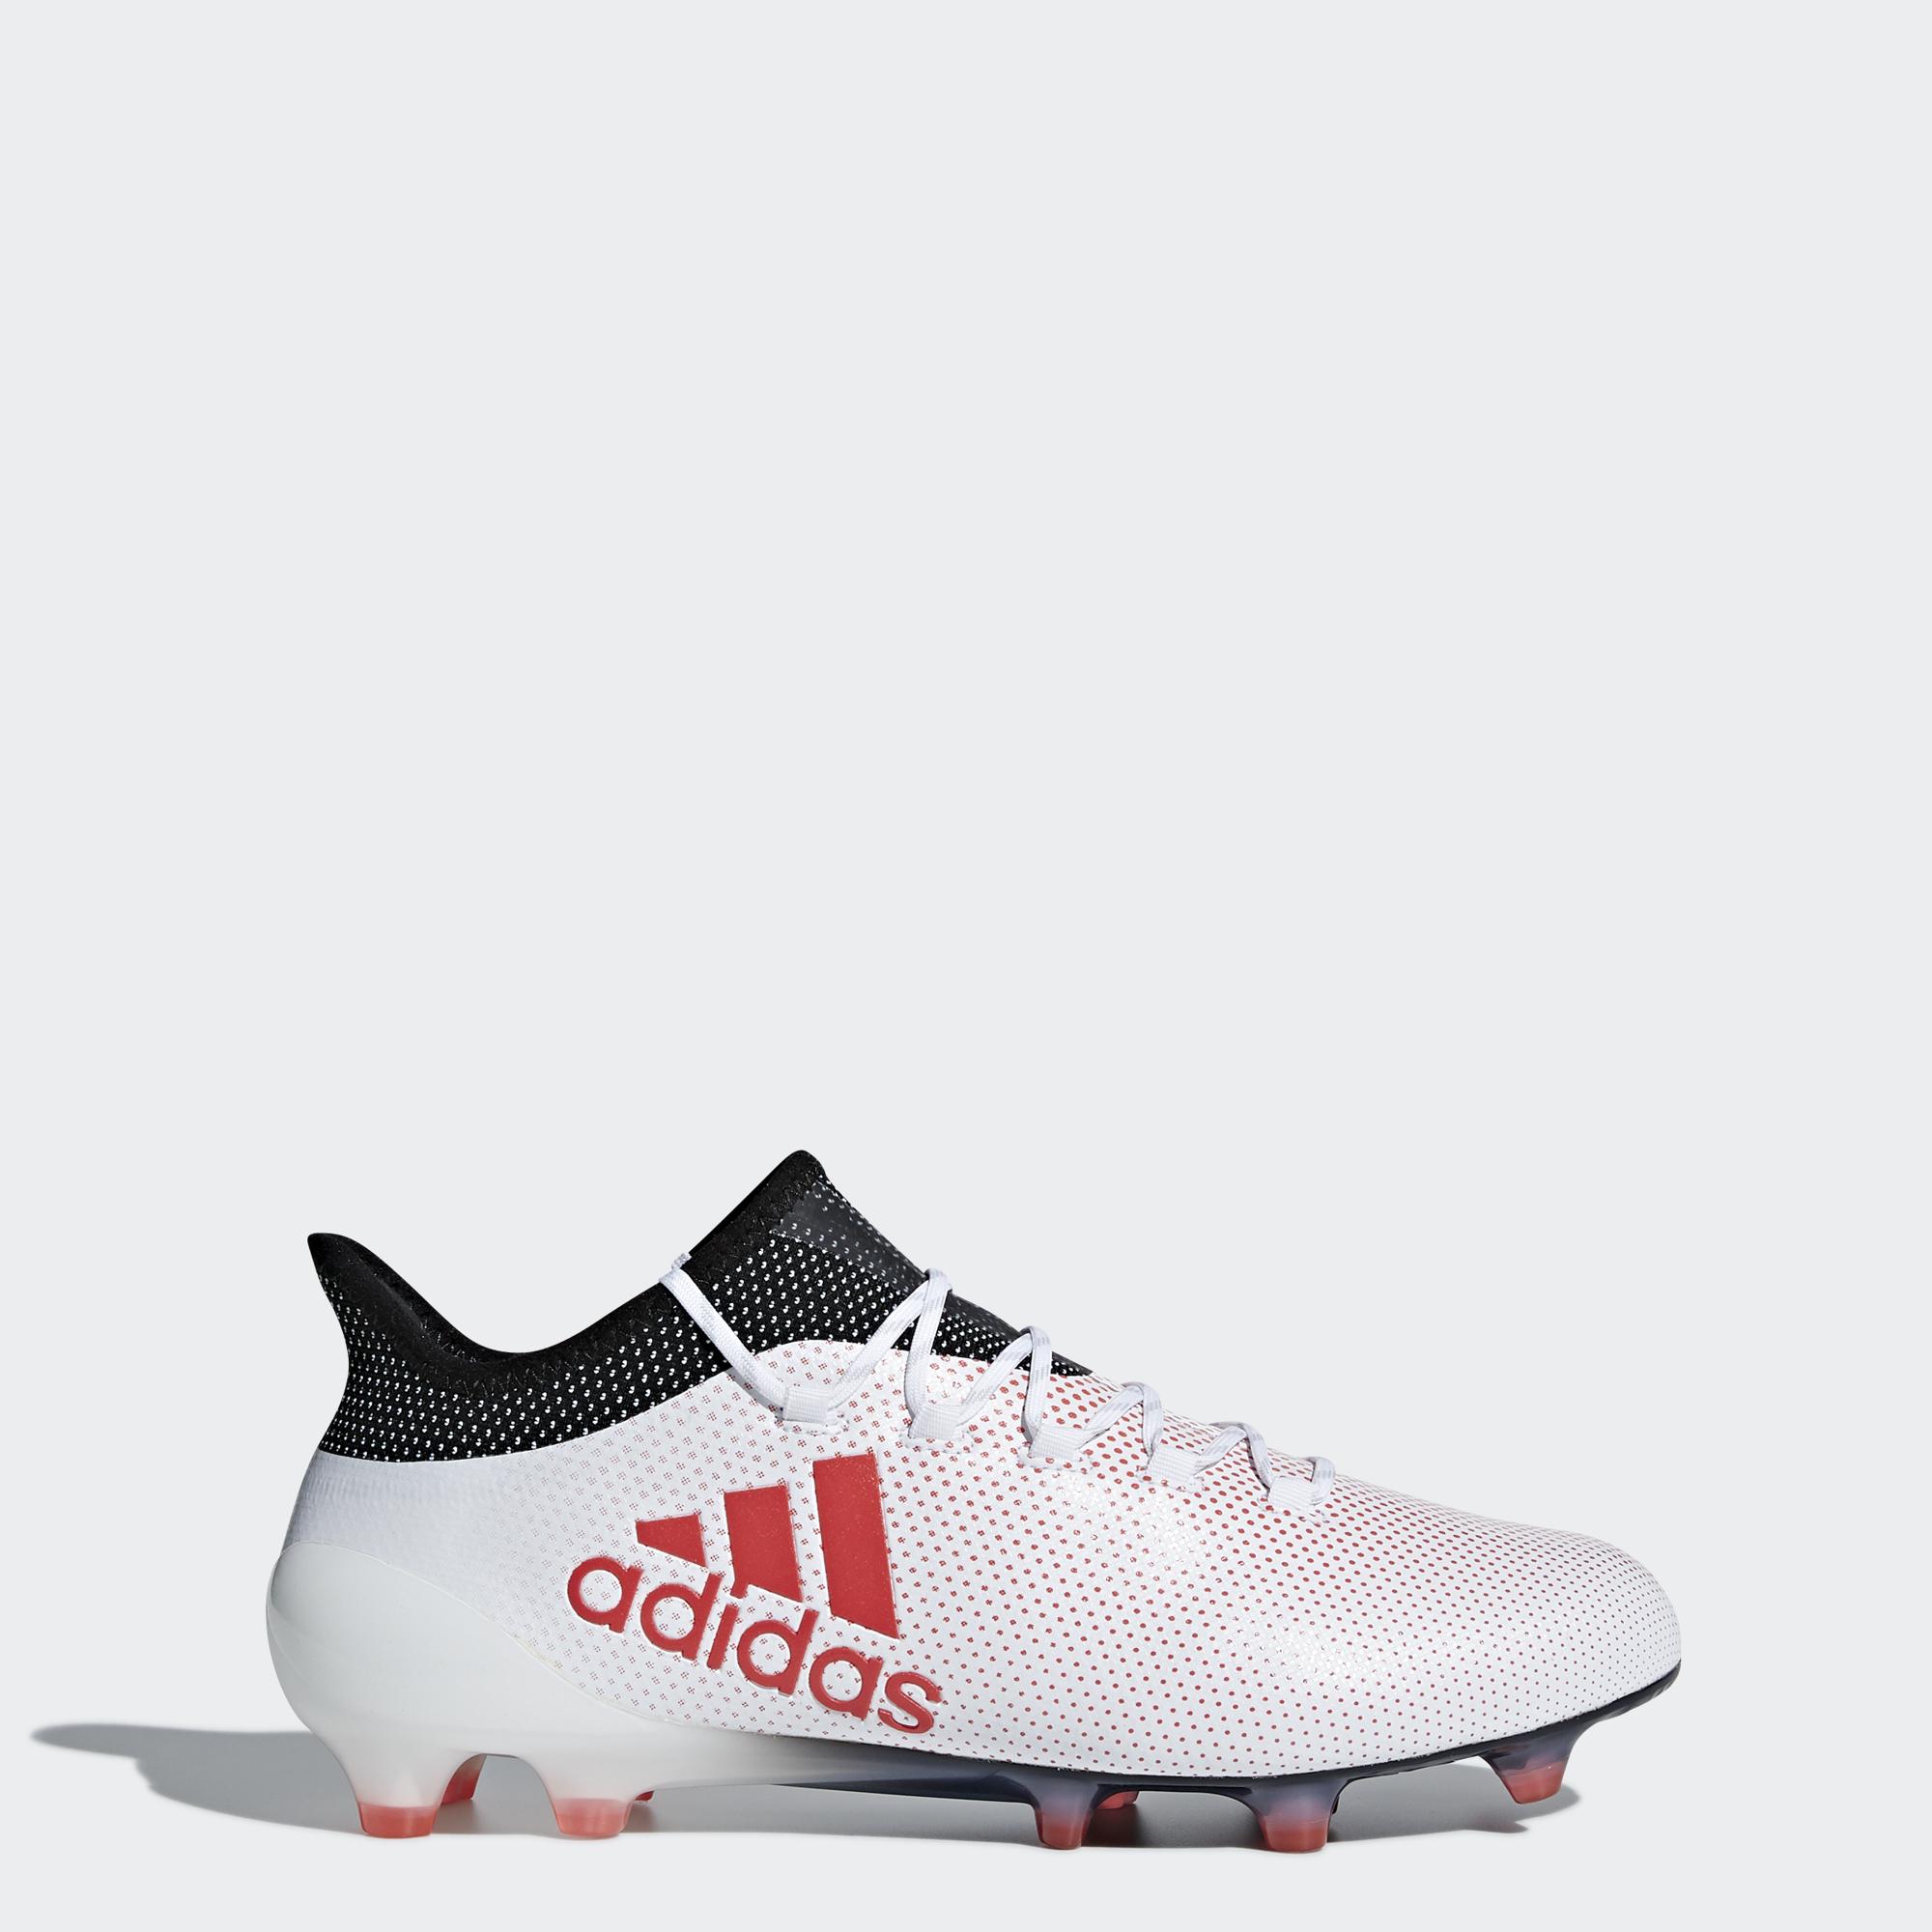 Adidas Scarpe Calcio X 17.1 Fg Bianco Negozio Online | Tifoshop